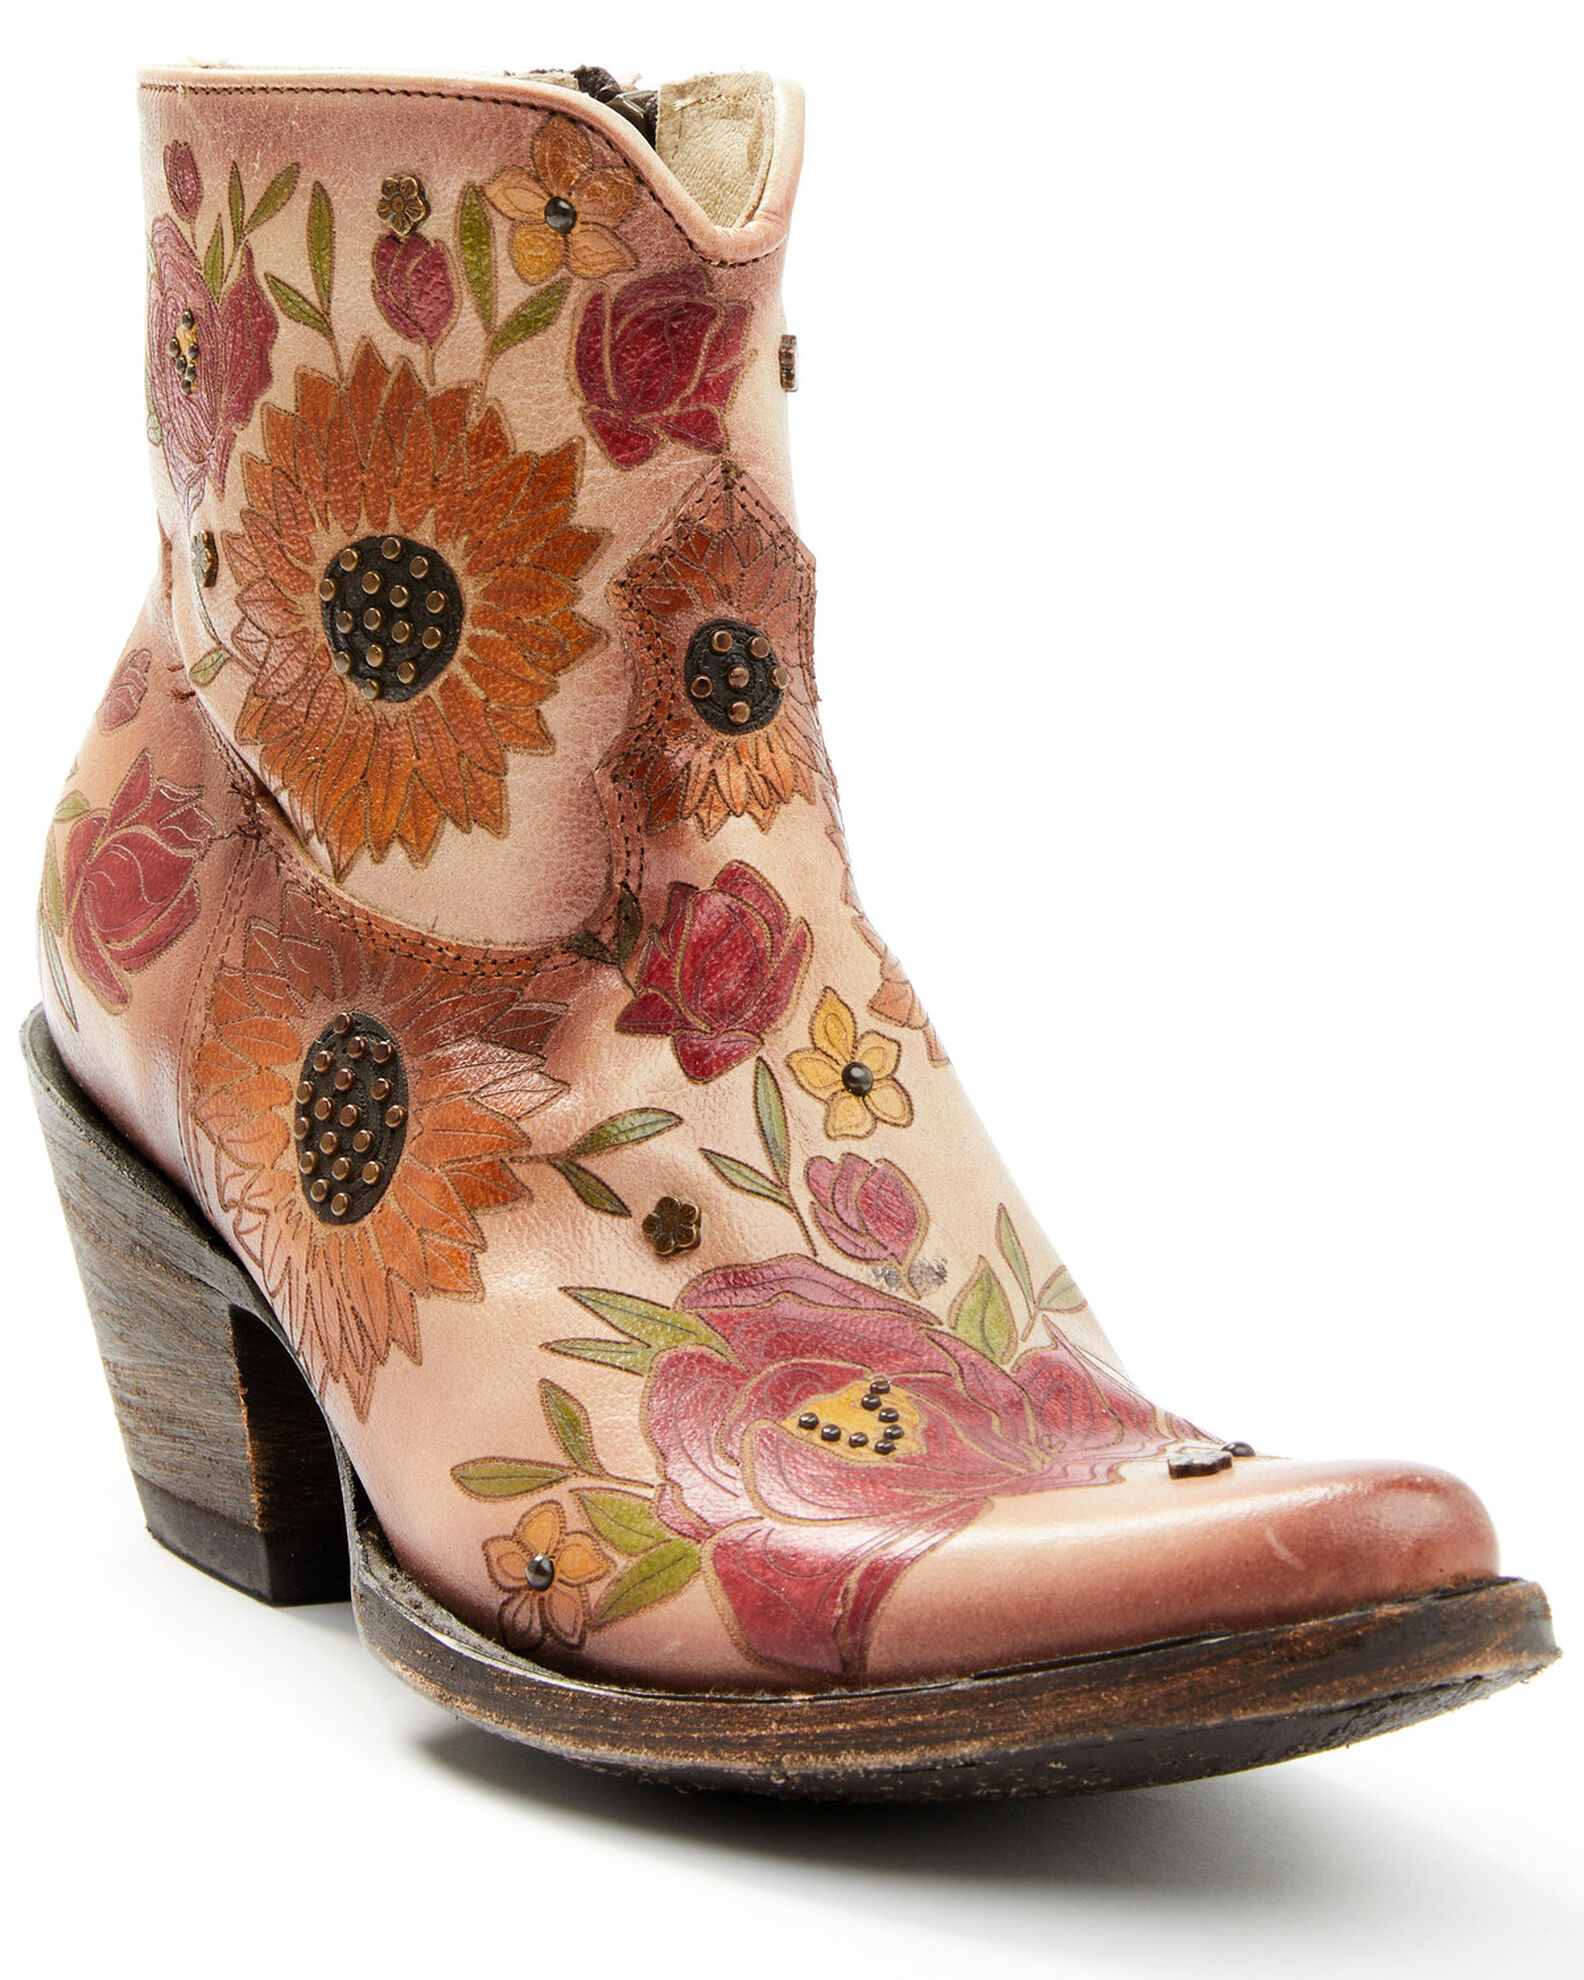 Old Gringo Women's Emma Fashion Booties - Medium Toe